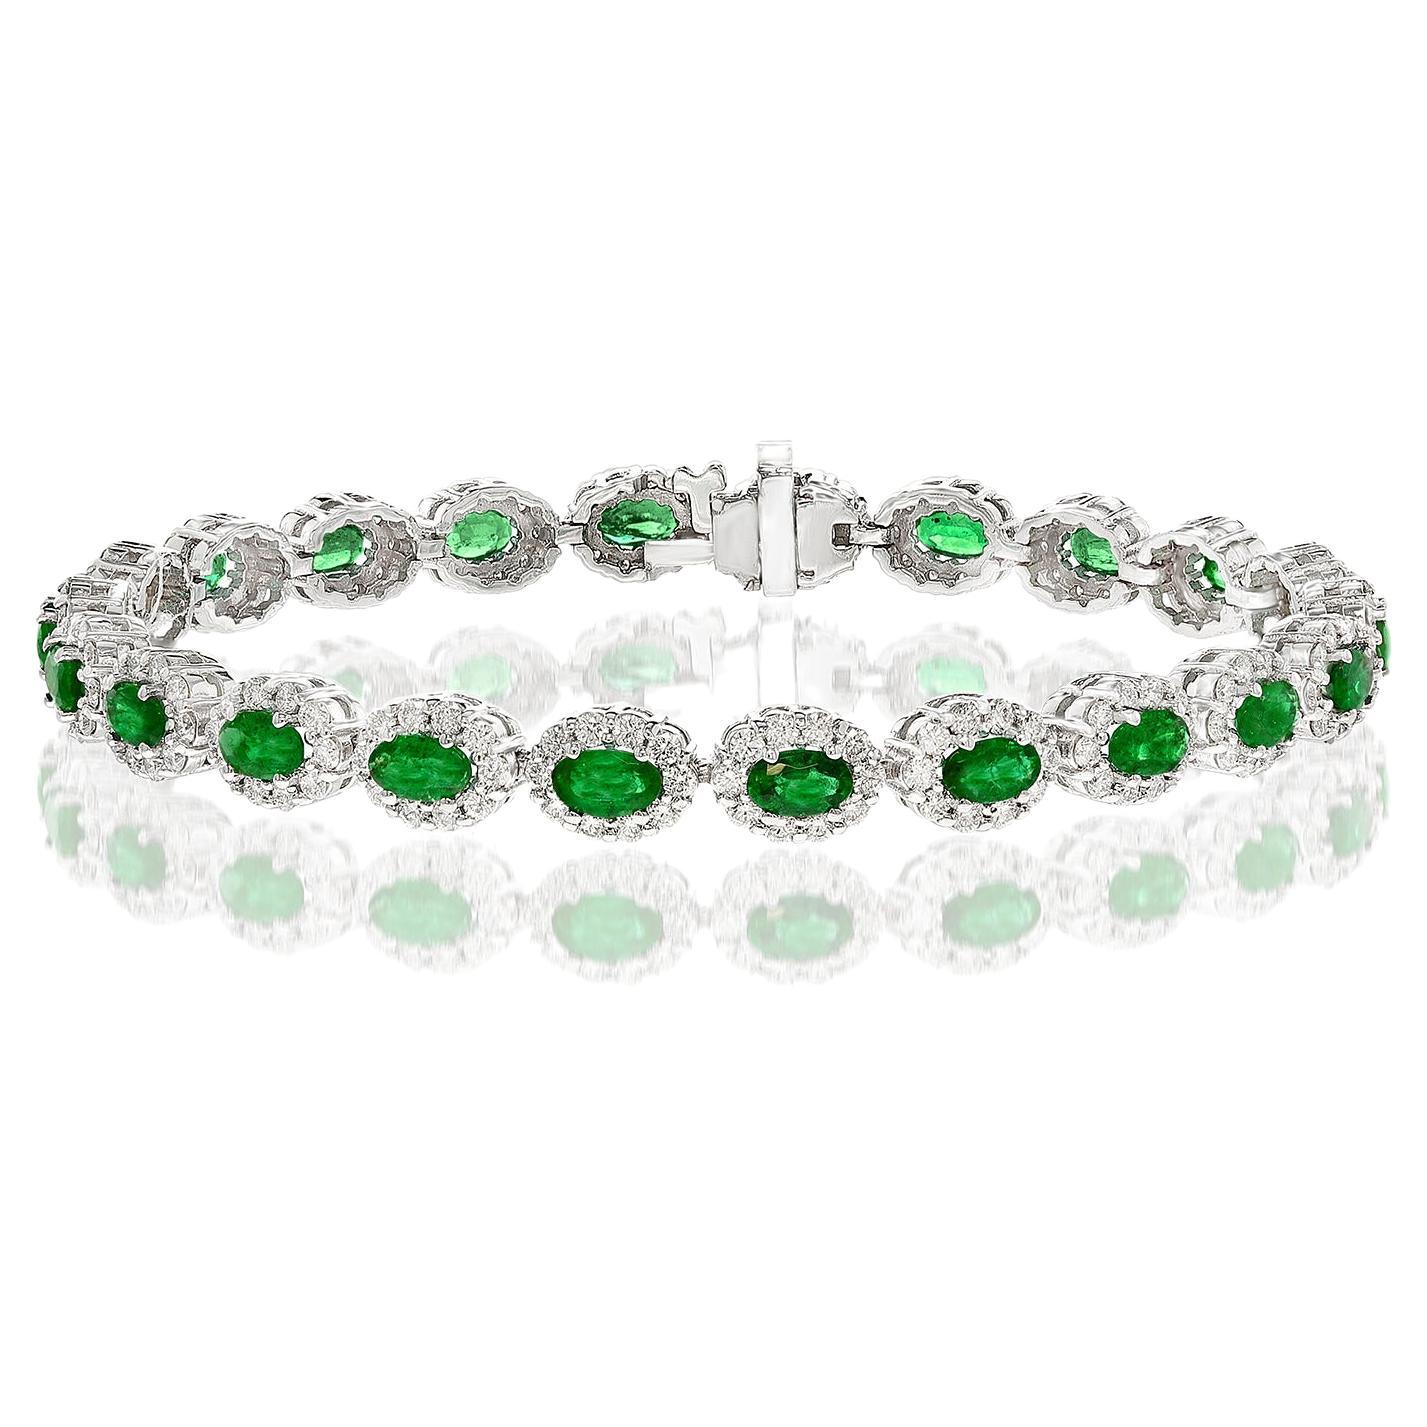 4.69 Carat Oval Cut Emerald and Diamond Halo Bracelet in 14K White Gold